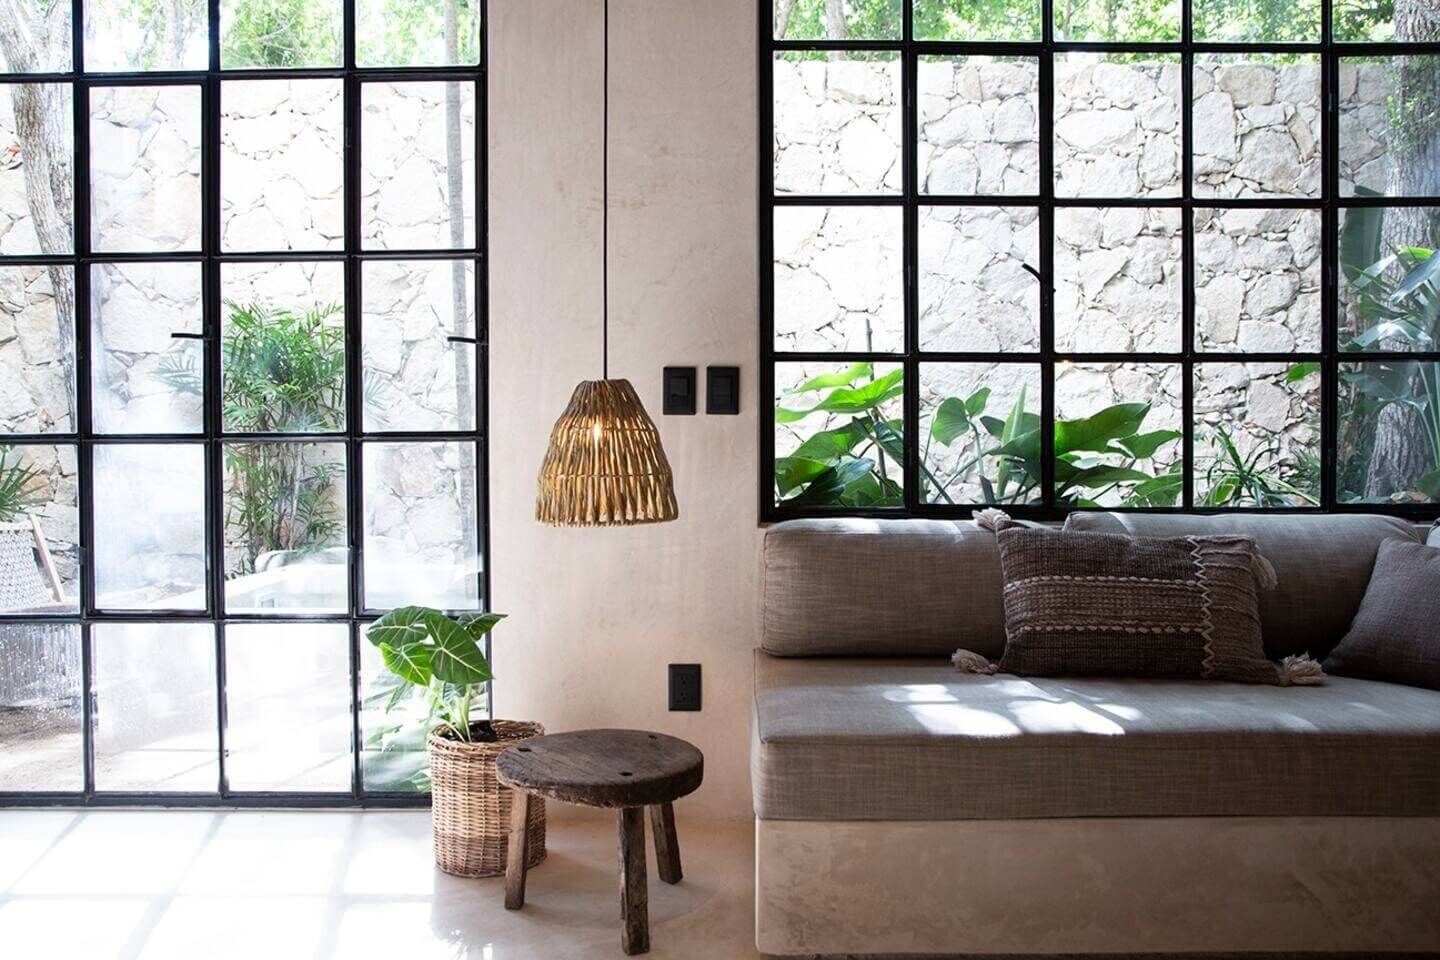 LianeTulum ABeautifulStudioApartmentAirbnbinMexico TheNordroom2 Liane Tulum: A Beautiful Studio Apartment Airbnb in Mexico